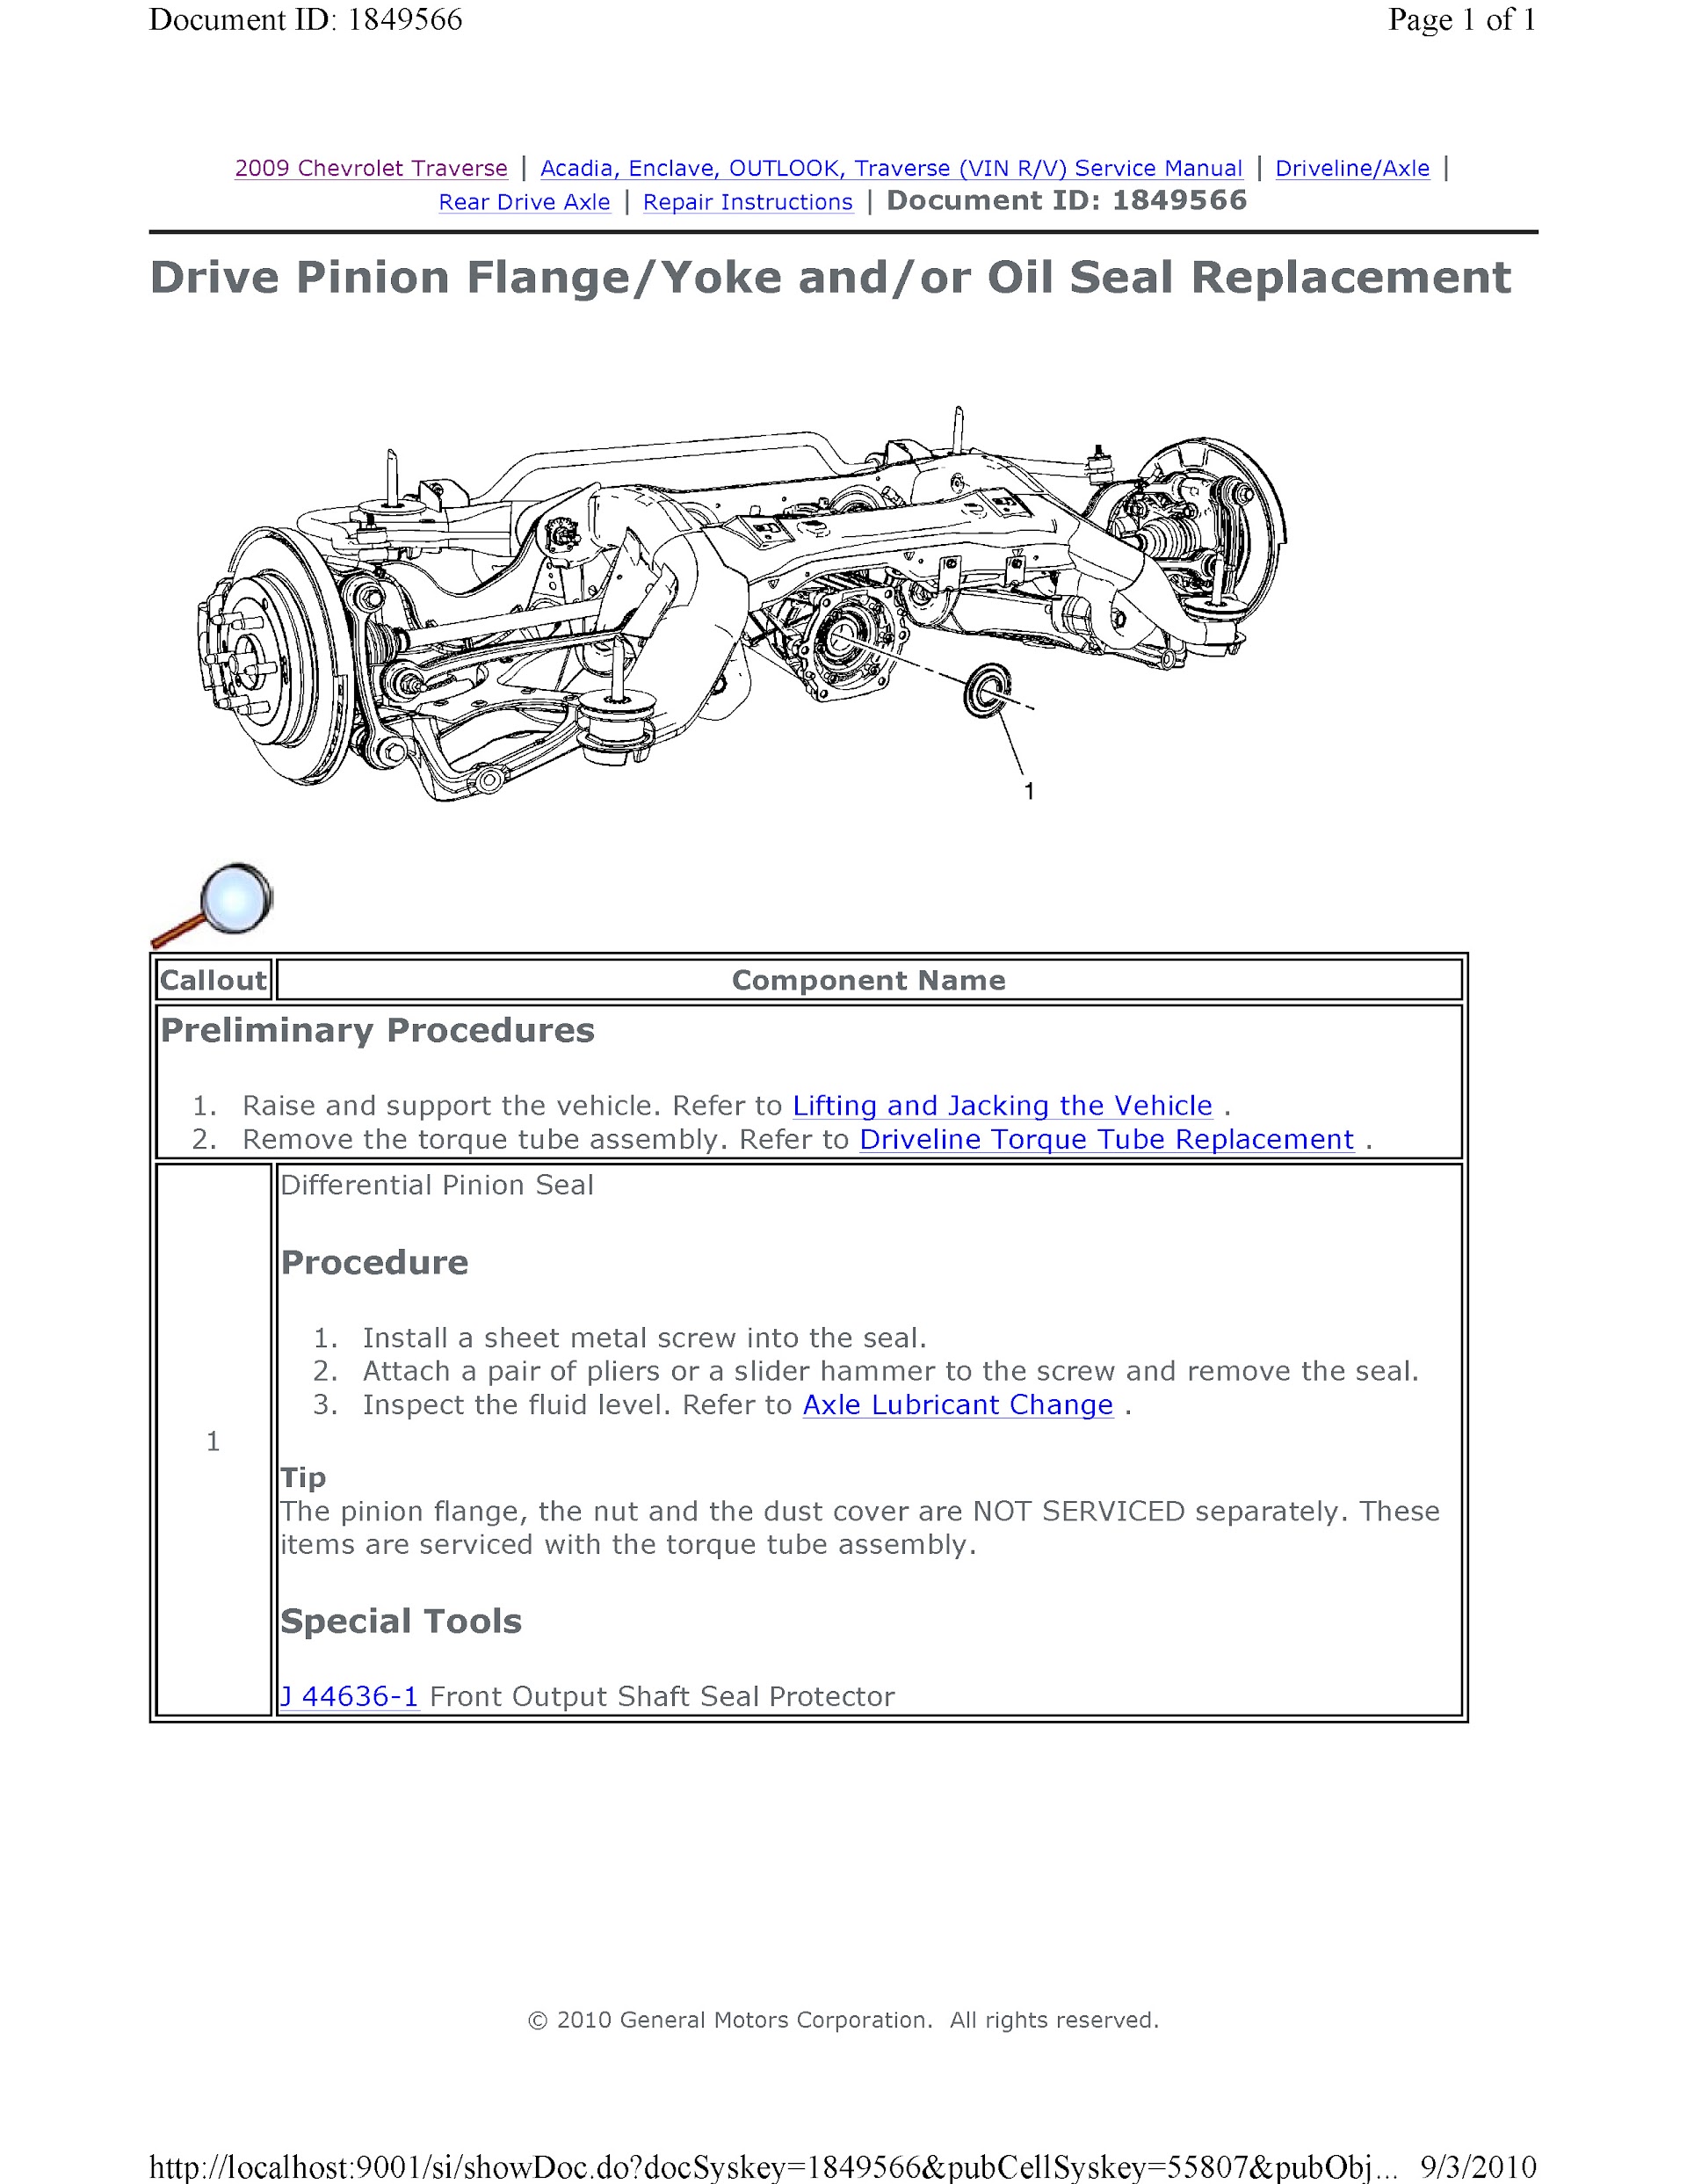 CONTENTS: 2009-2010 Chevrolet Traverse Repair Manual